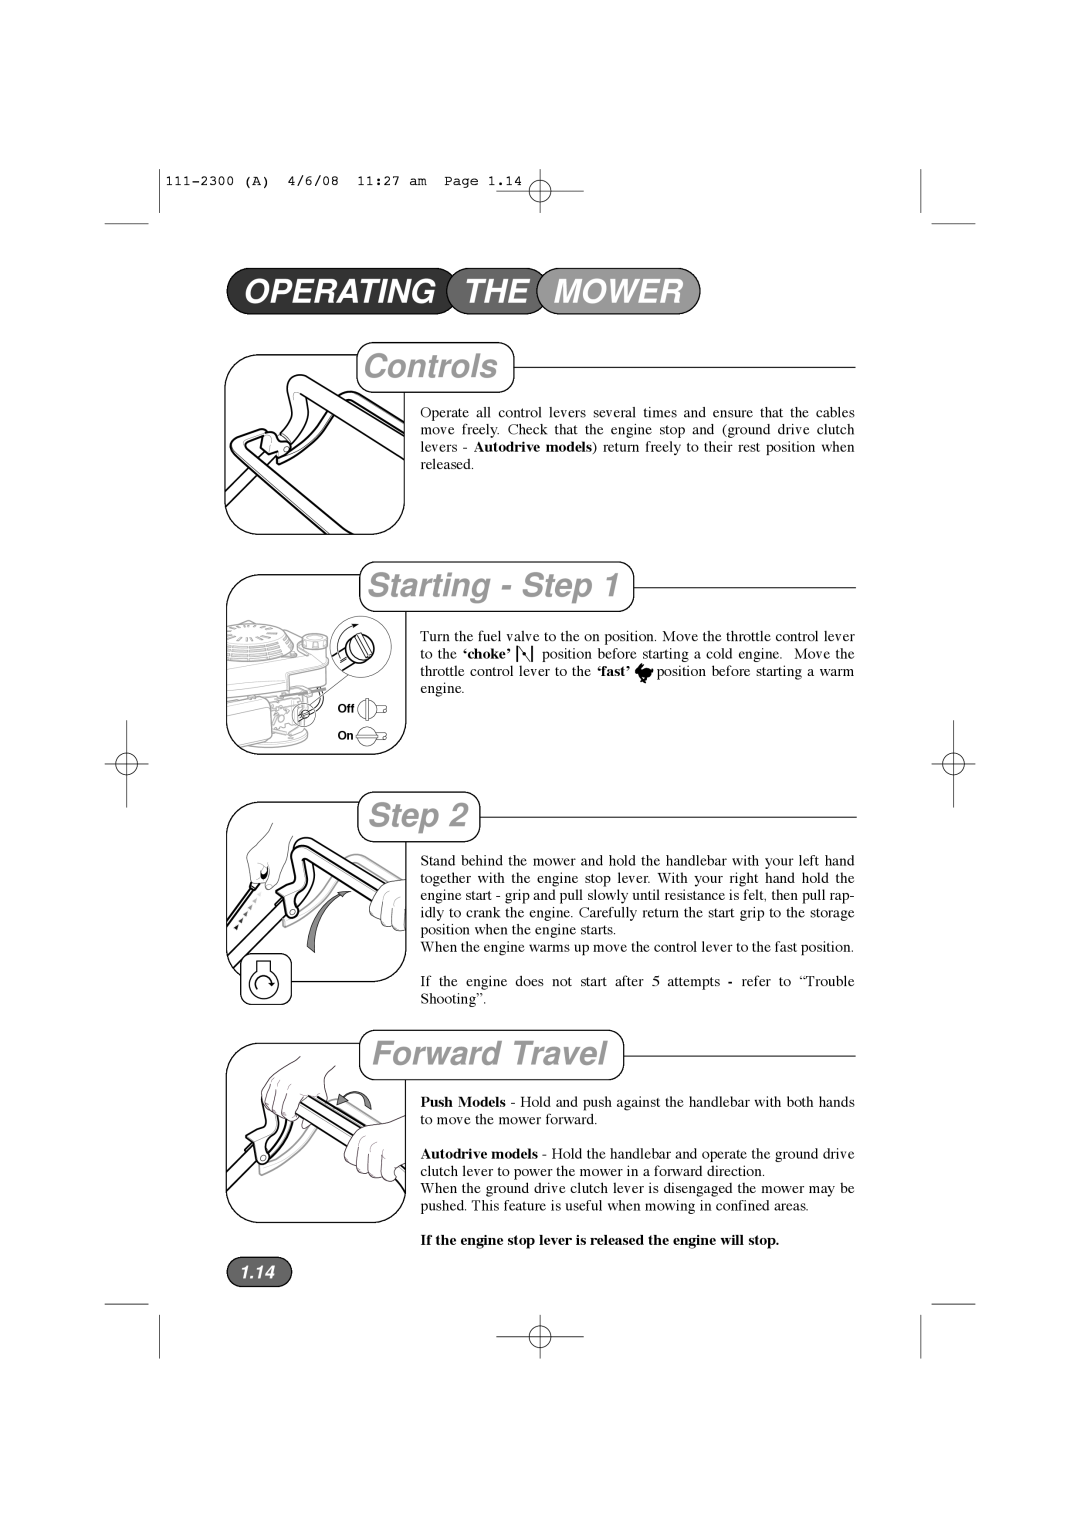 Hayter Mowers 43F manual Operating The Mower, Controls, Starting - Step, Forward Travel, 1.14 